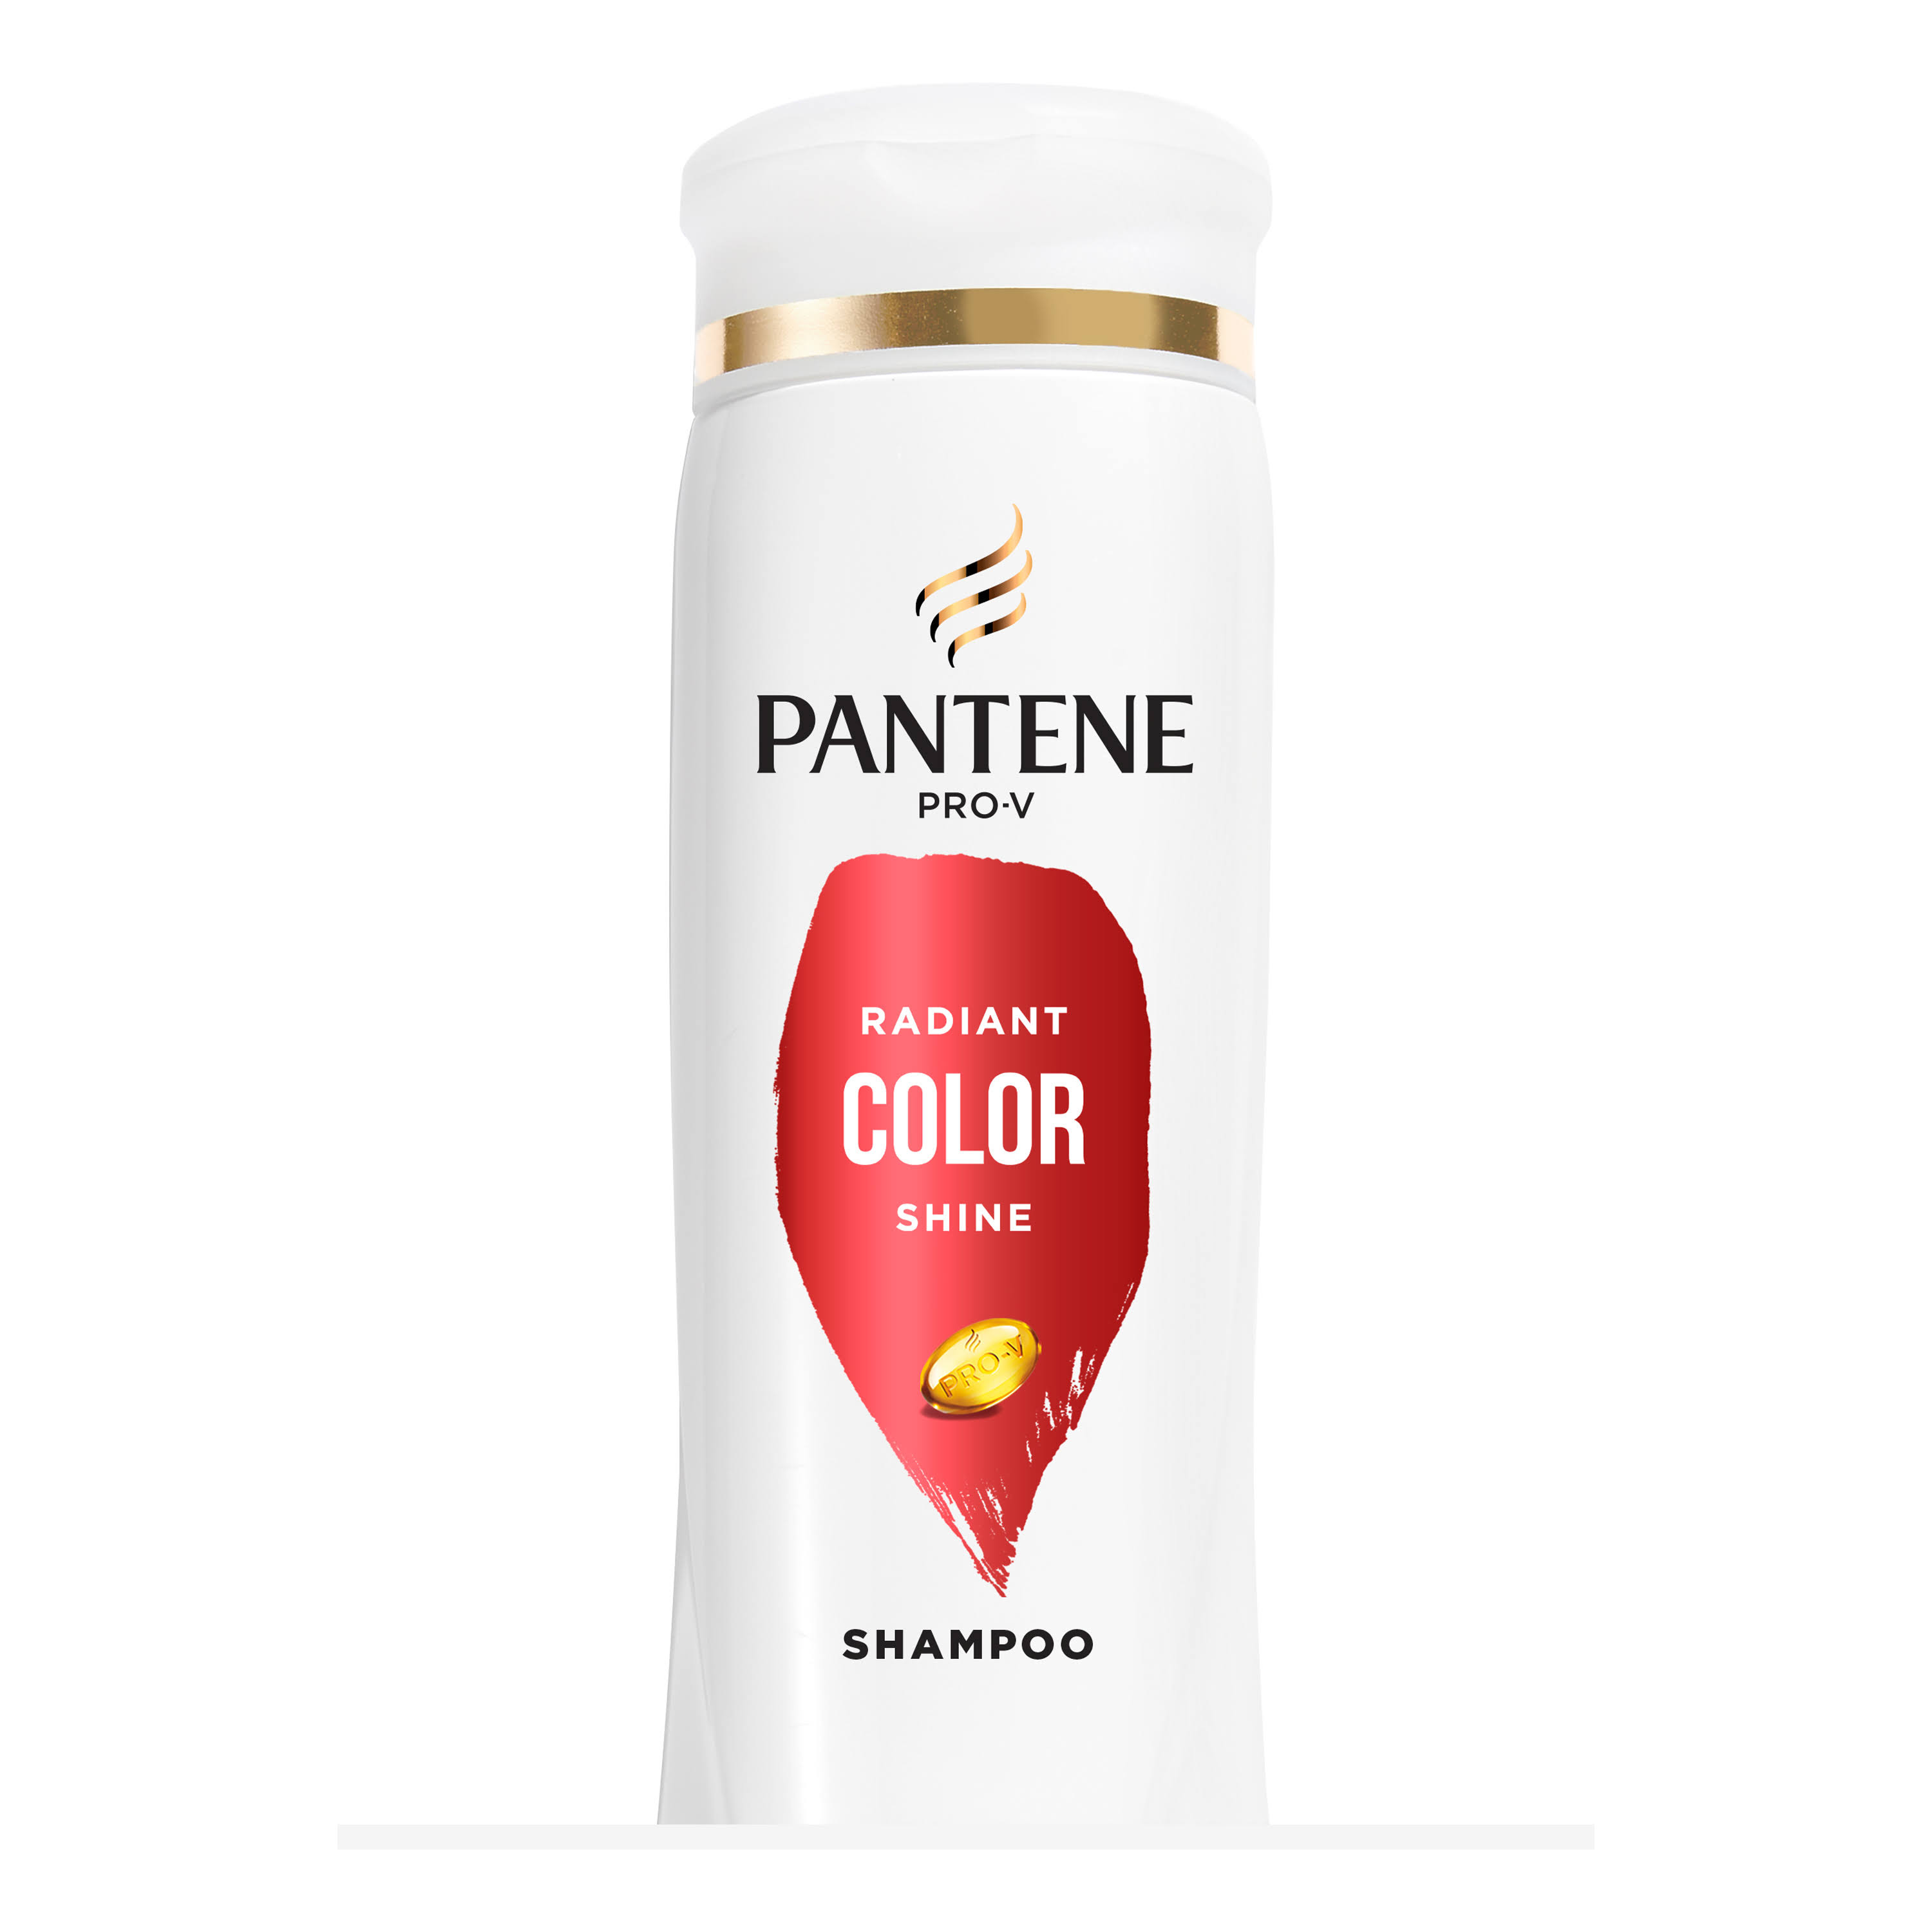 Pantene Pro-V Radiant Color Shine Shampoo 12 oz